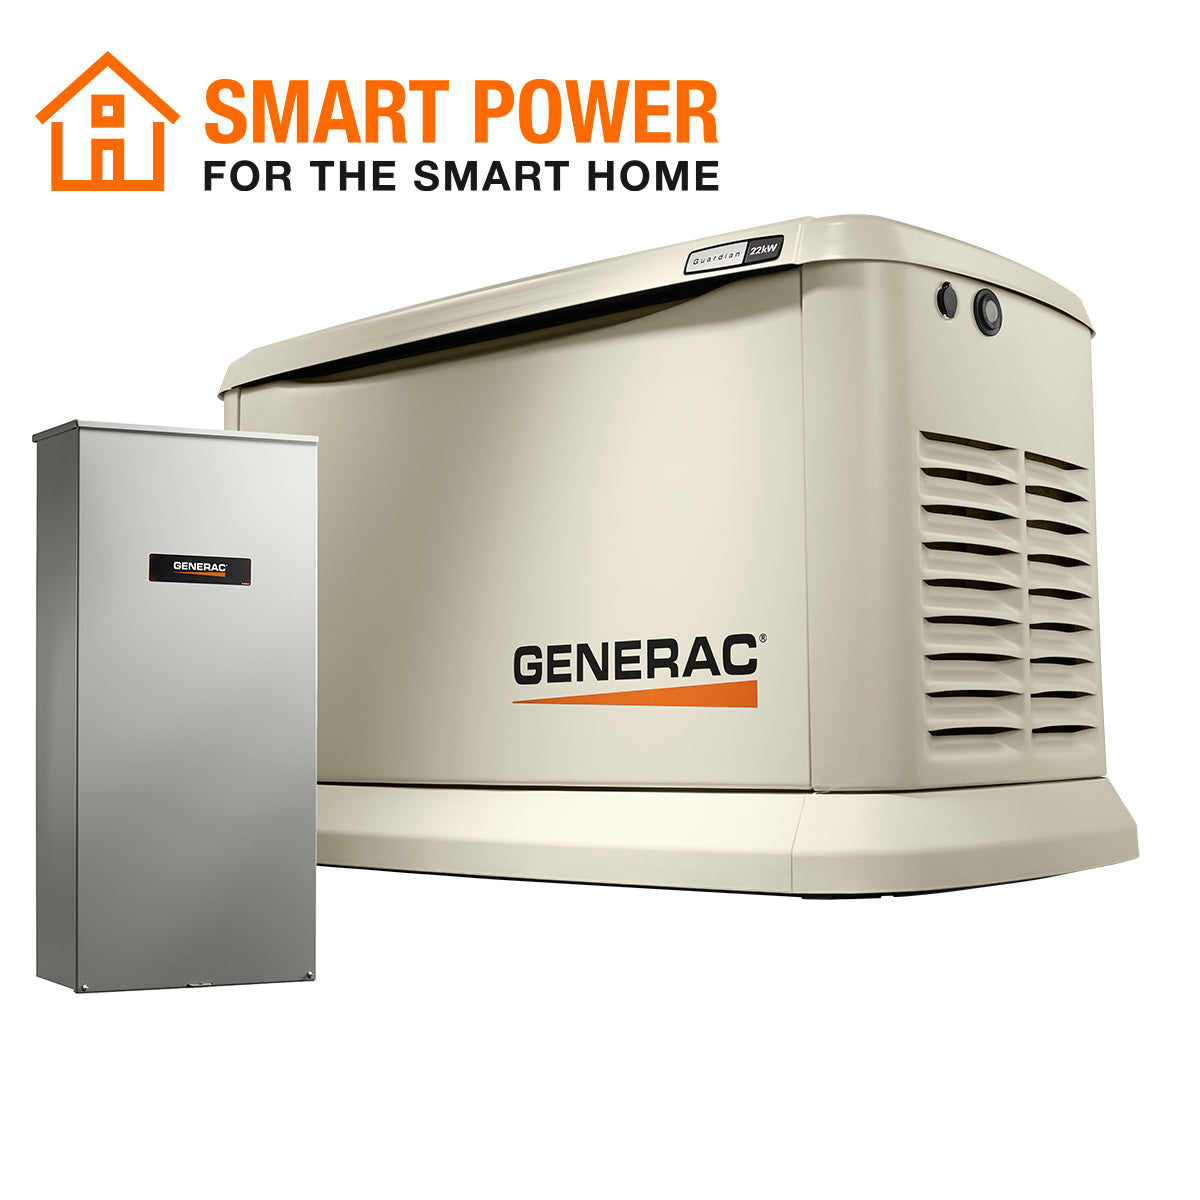 Generac 70432 22,000-Watt Single Phase Auto Start Air Cooled Standby Generator.